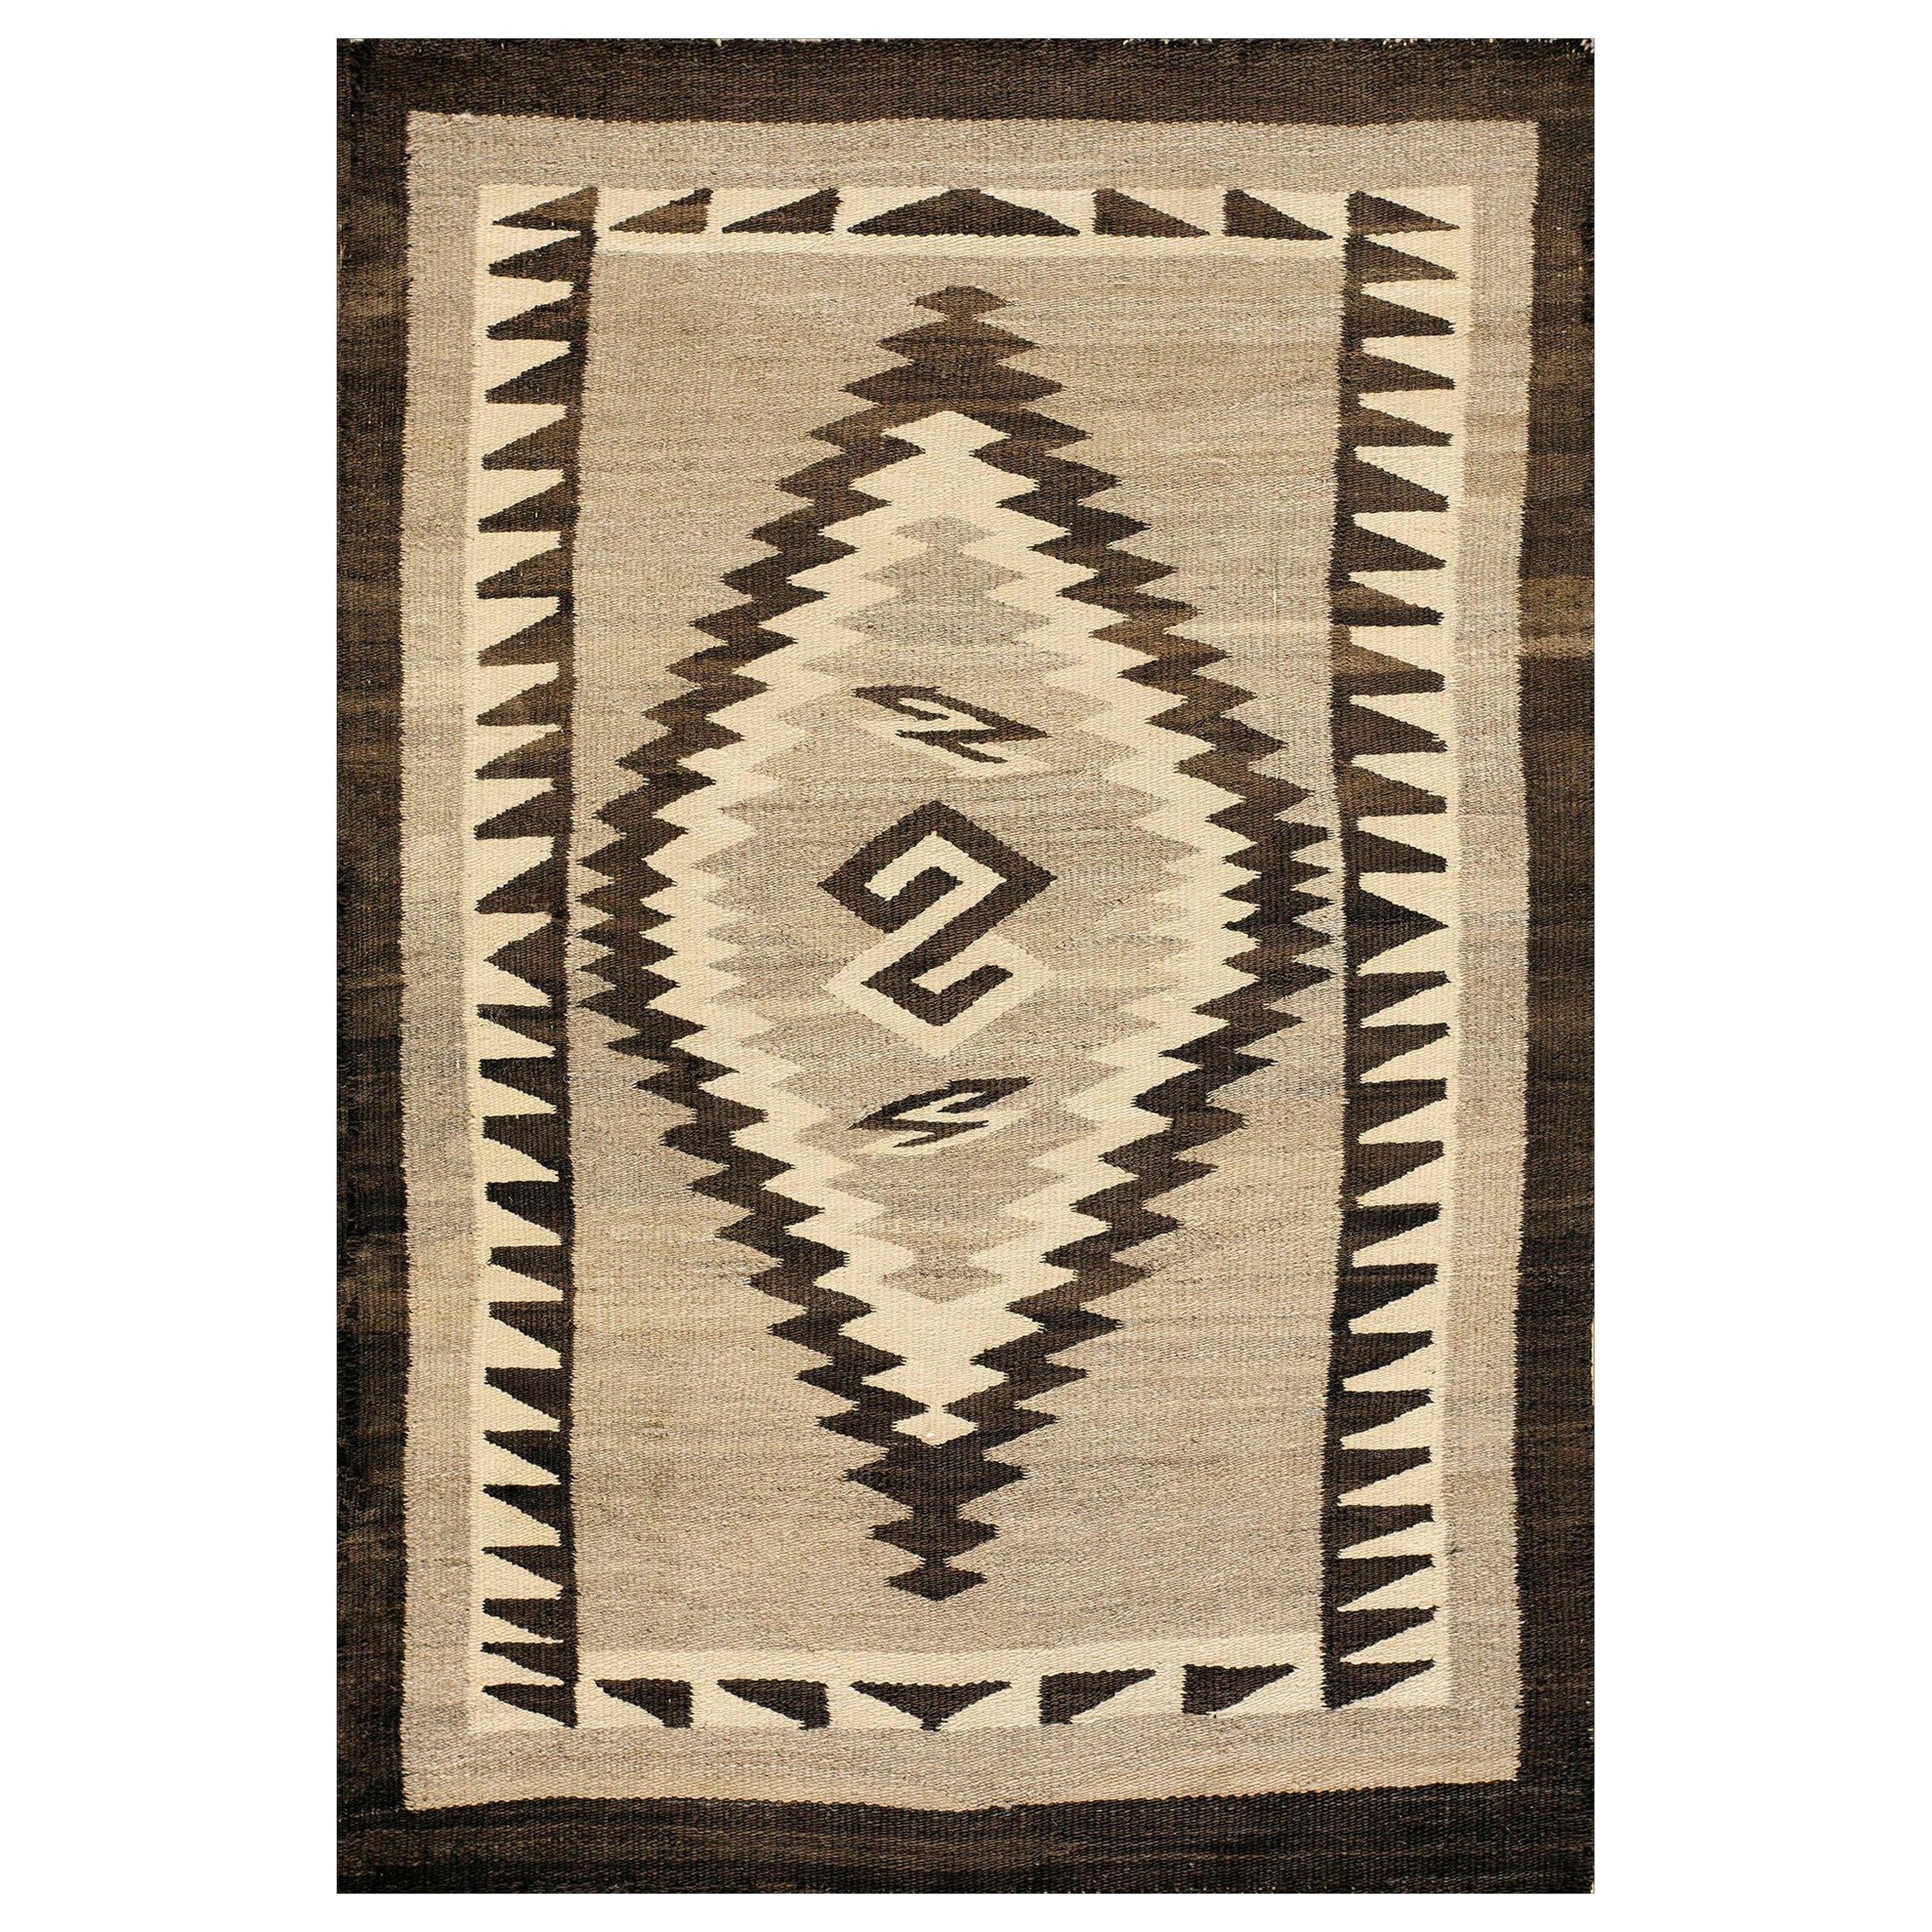 1930s American Navajo Two Grey Hills Carpet ( 2'4" x 4'3" - 72 x 130 )